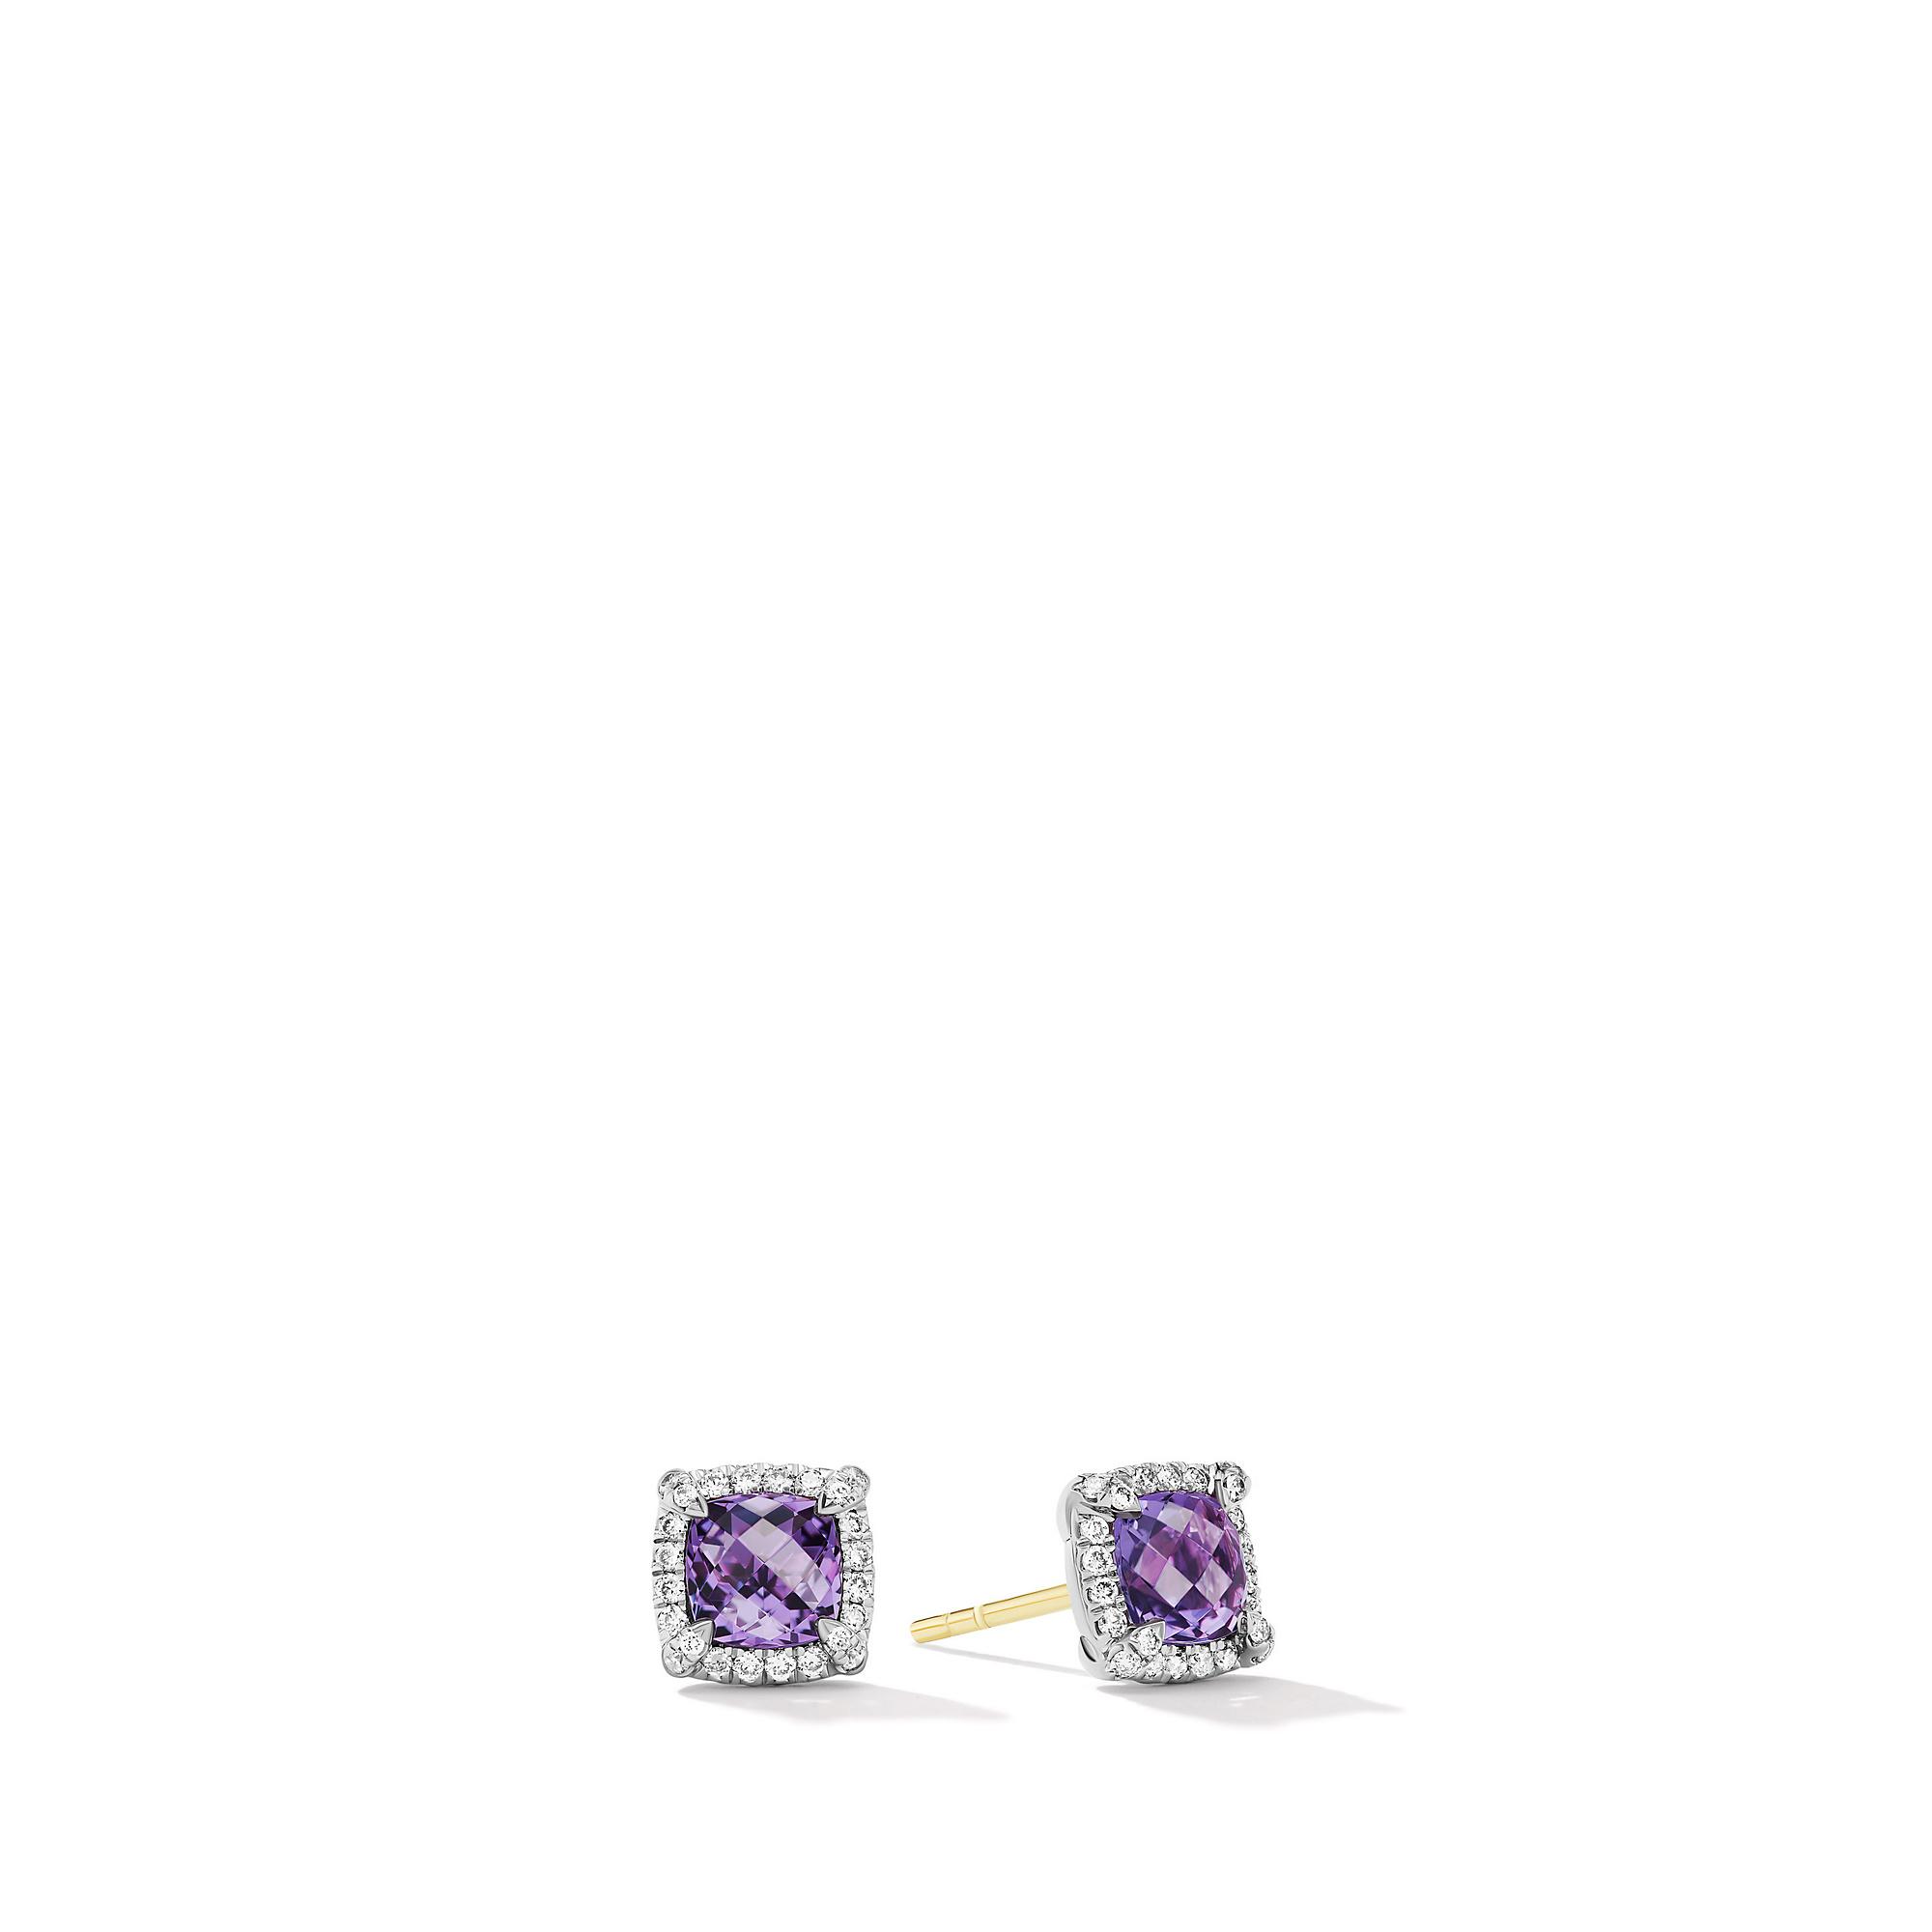 David Yurman Petite Chatelaine Pave Bezel Stud Earrings with Amethyst and Diamonds